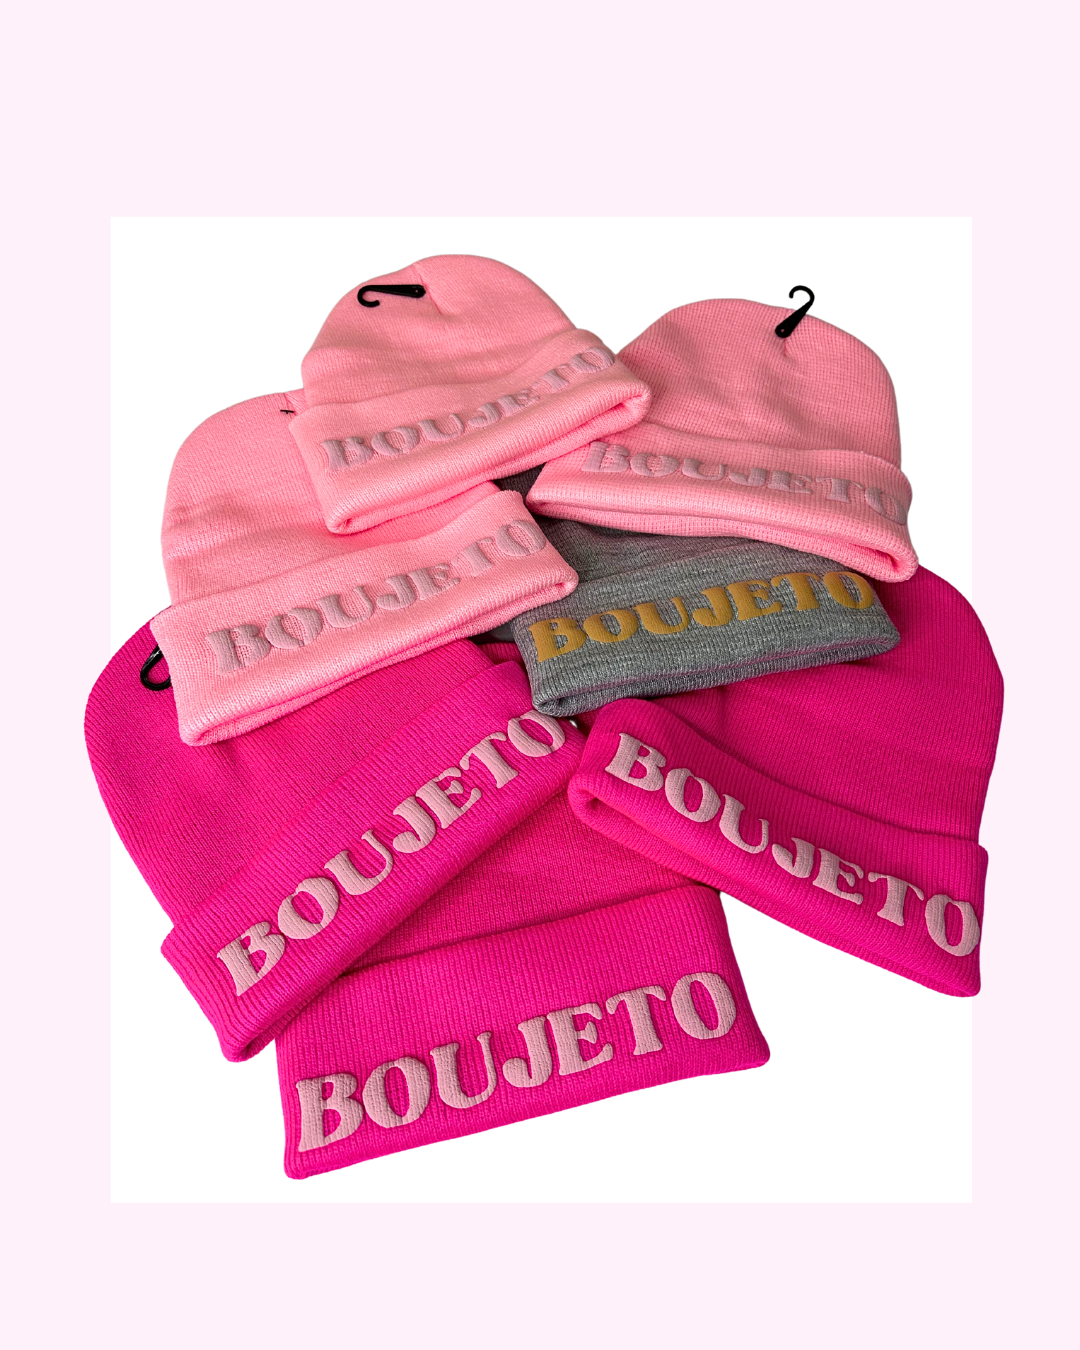 Boujeto Custom Puff Hat Merch